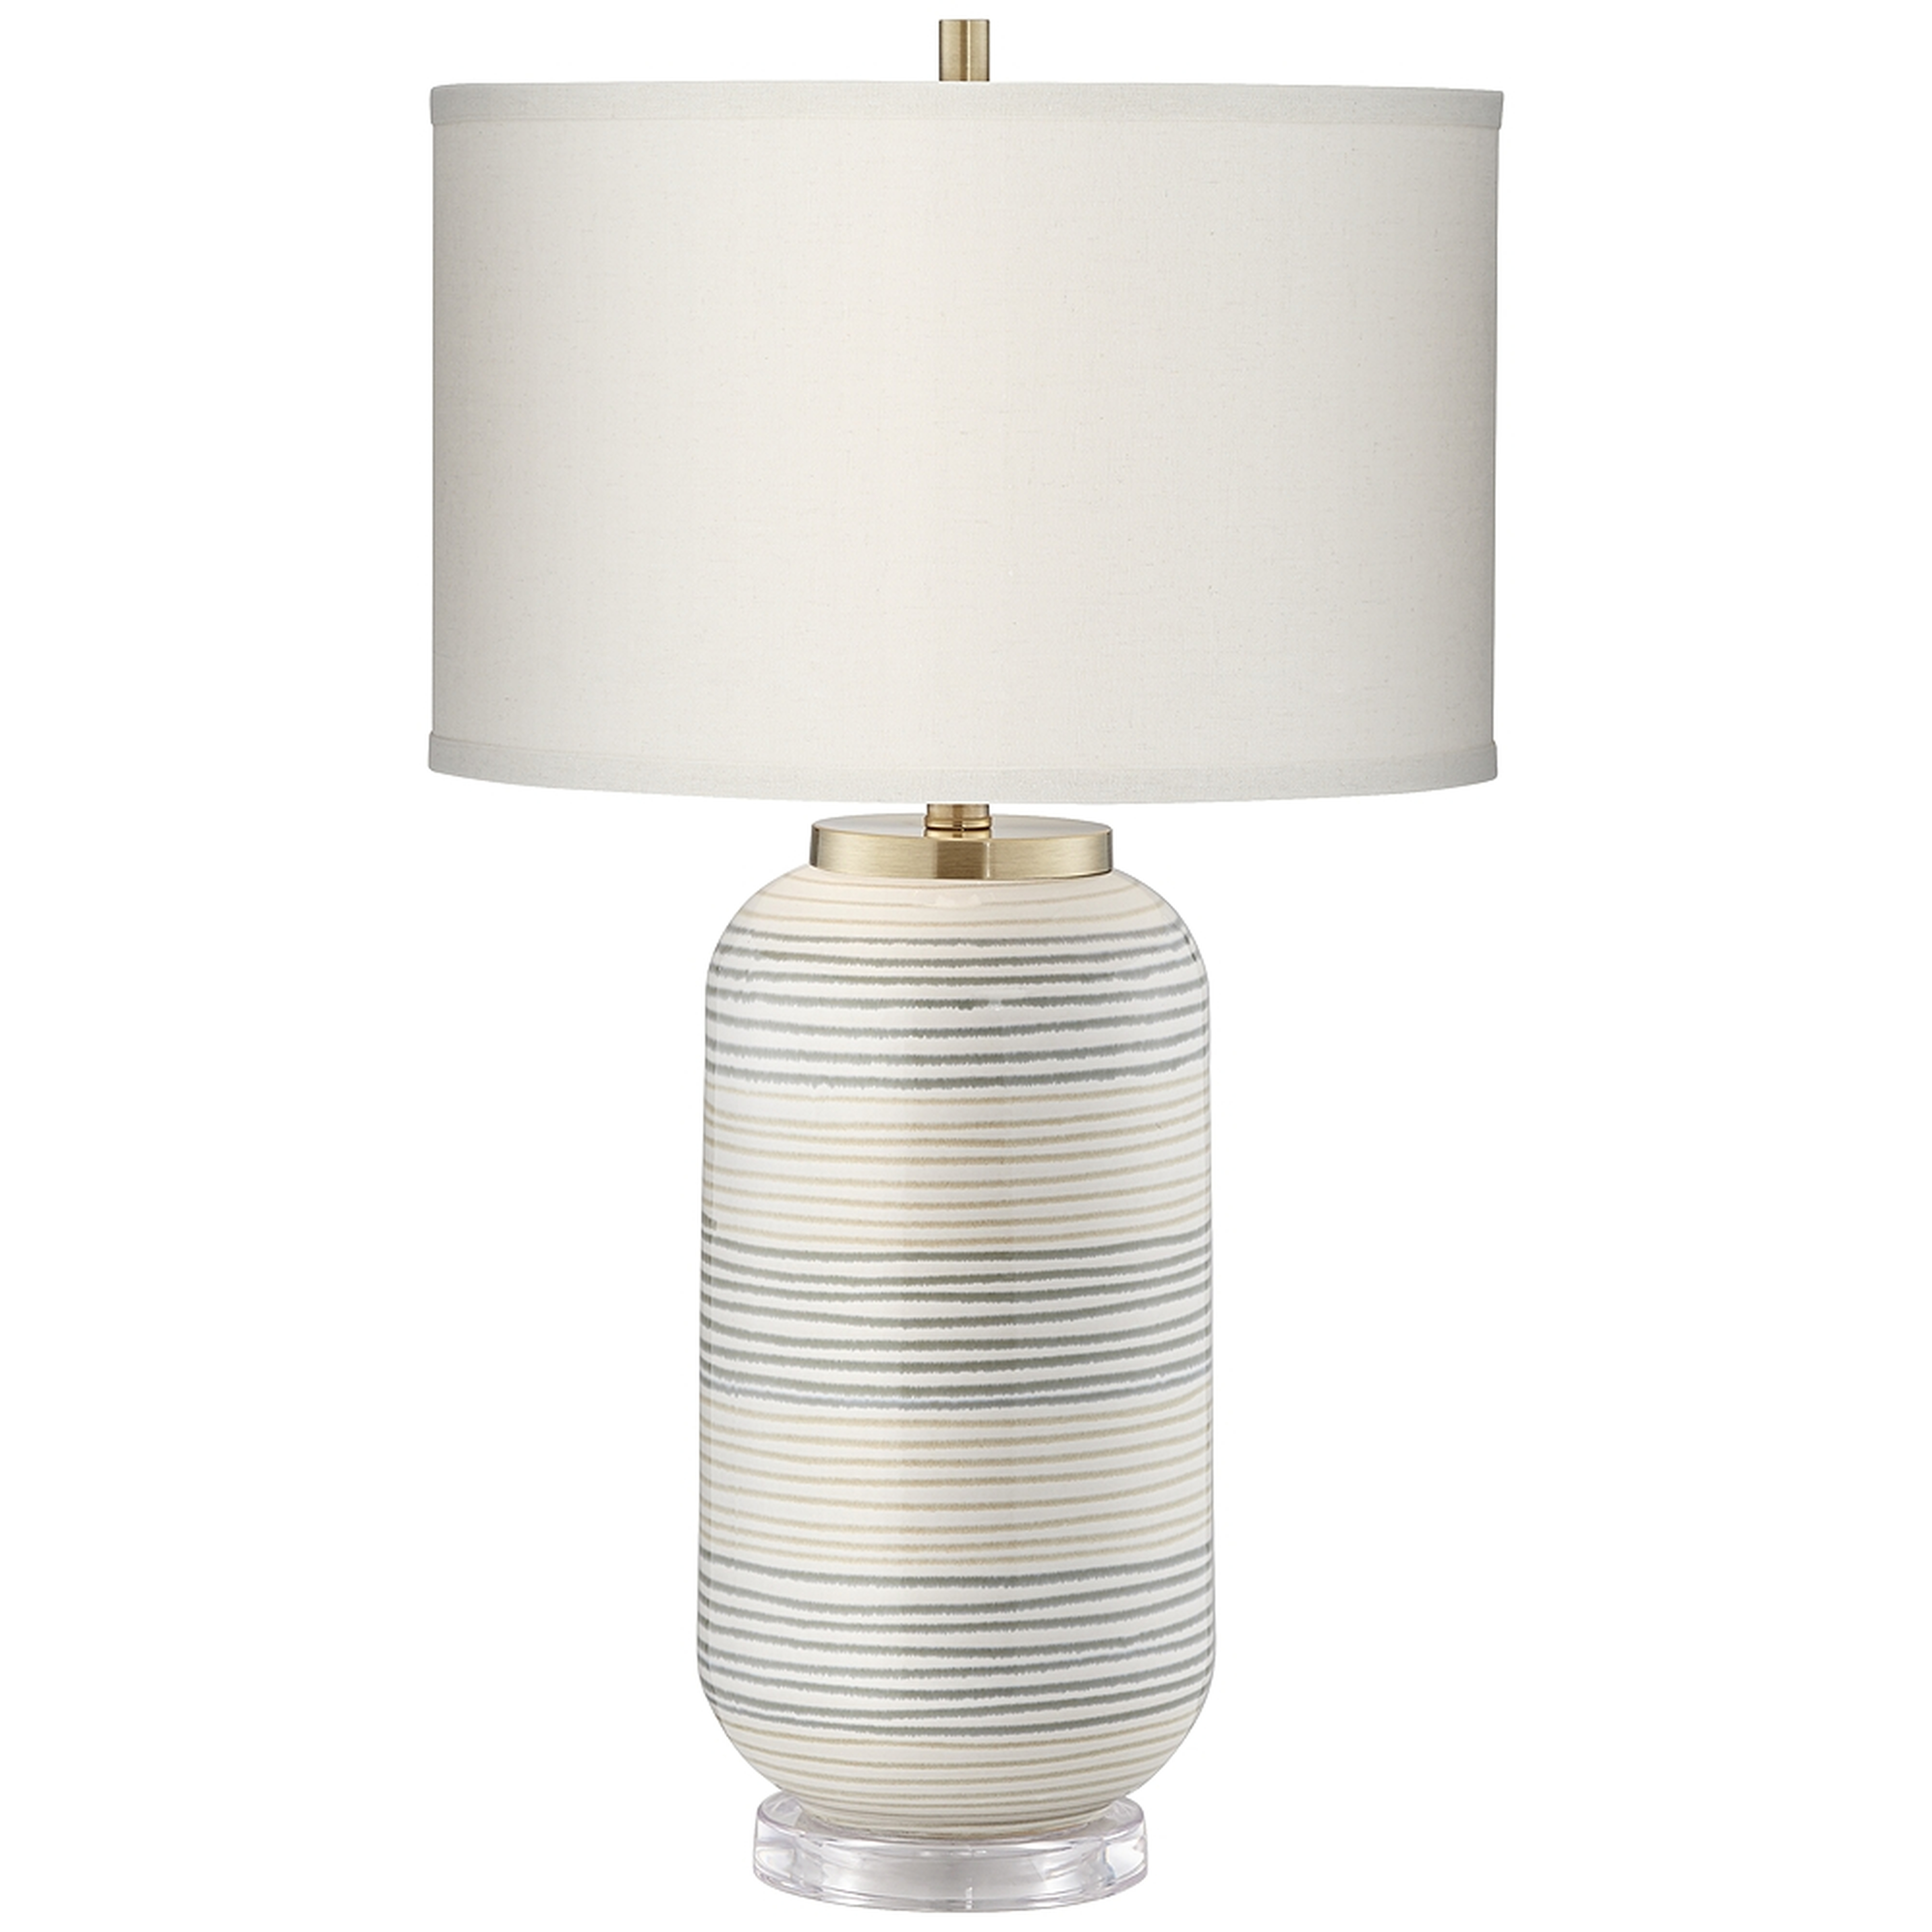 Striped Adler Multi-Color Ceramic Table Lamp - Lamps Plus